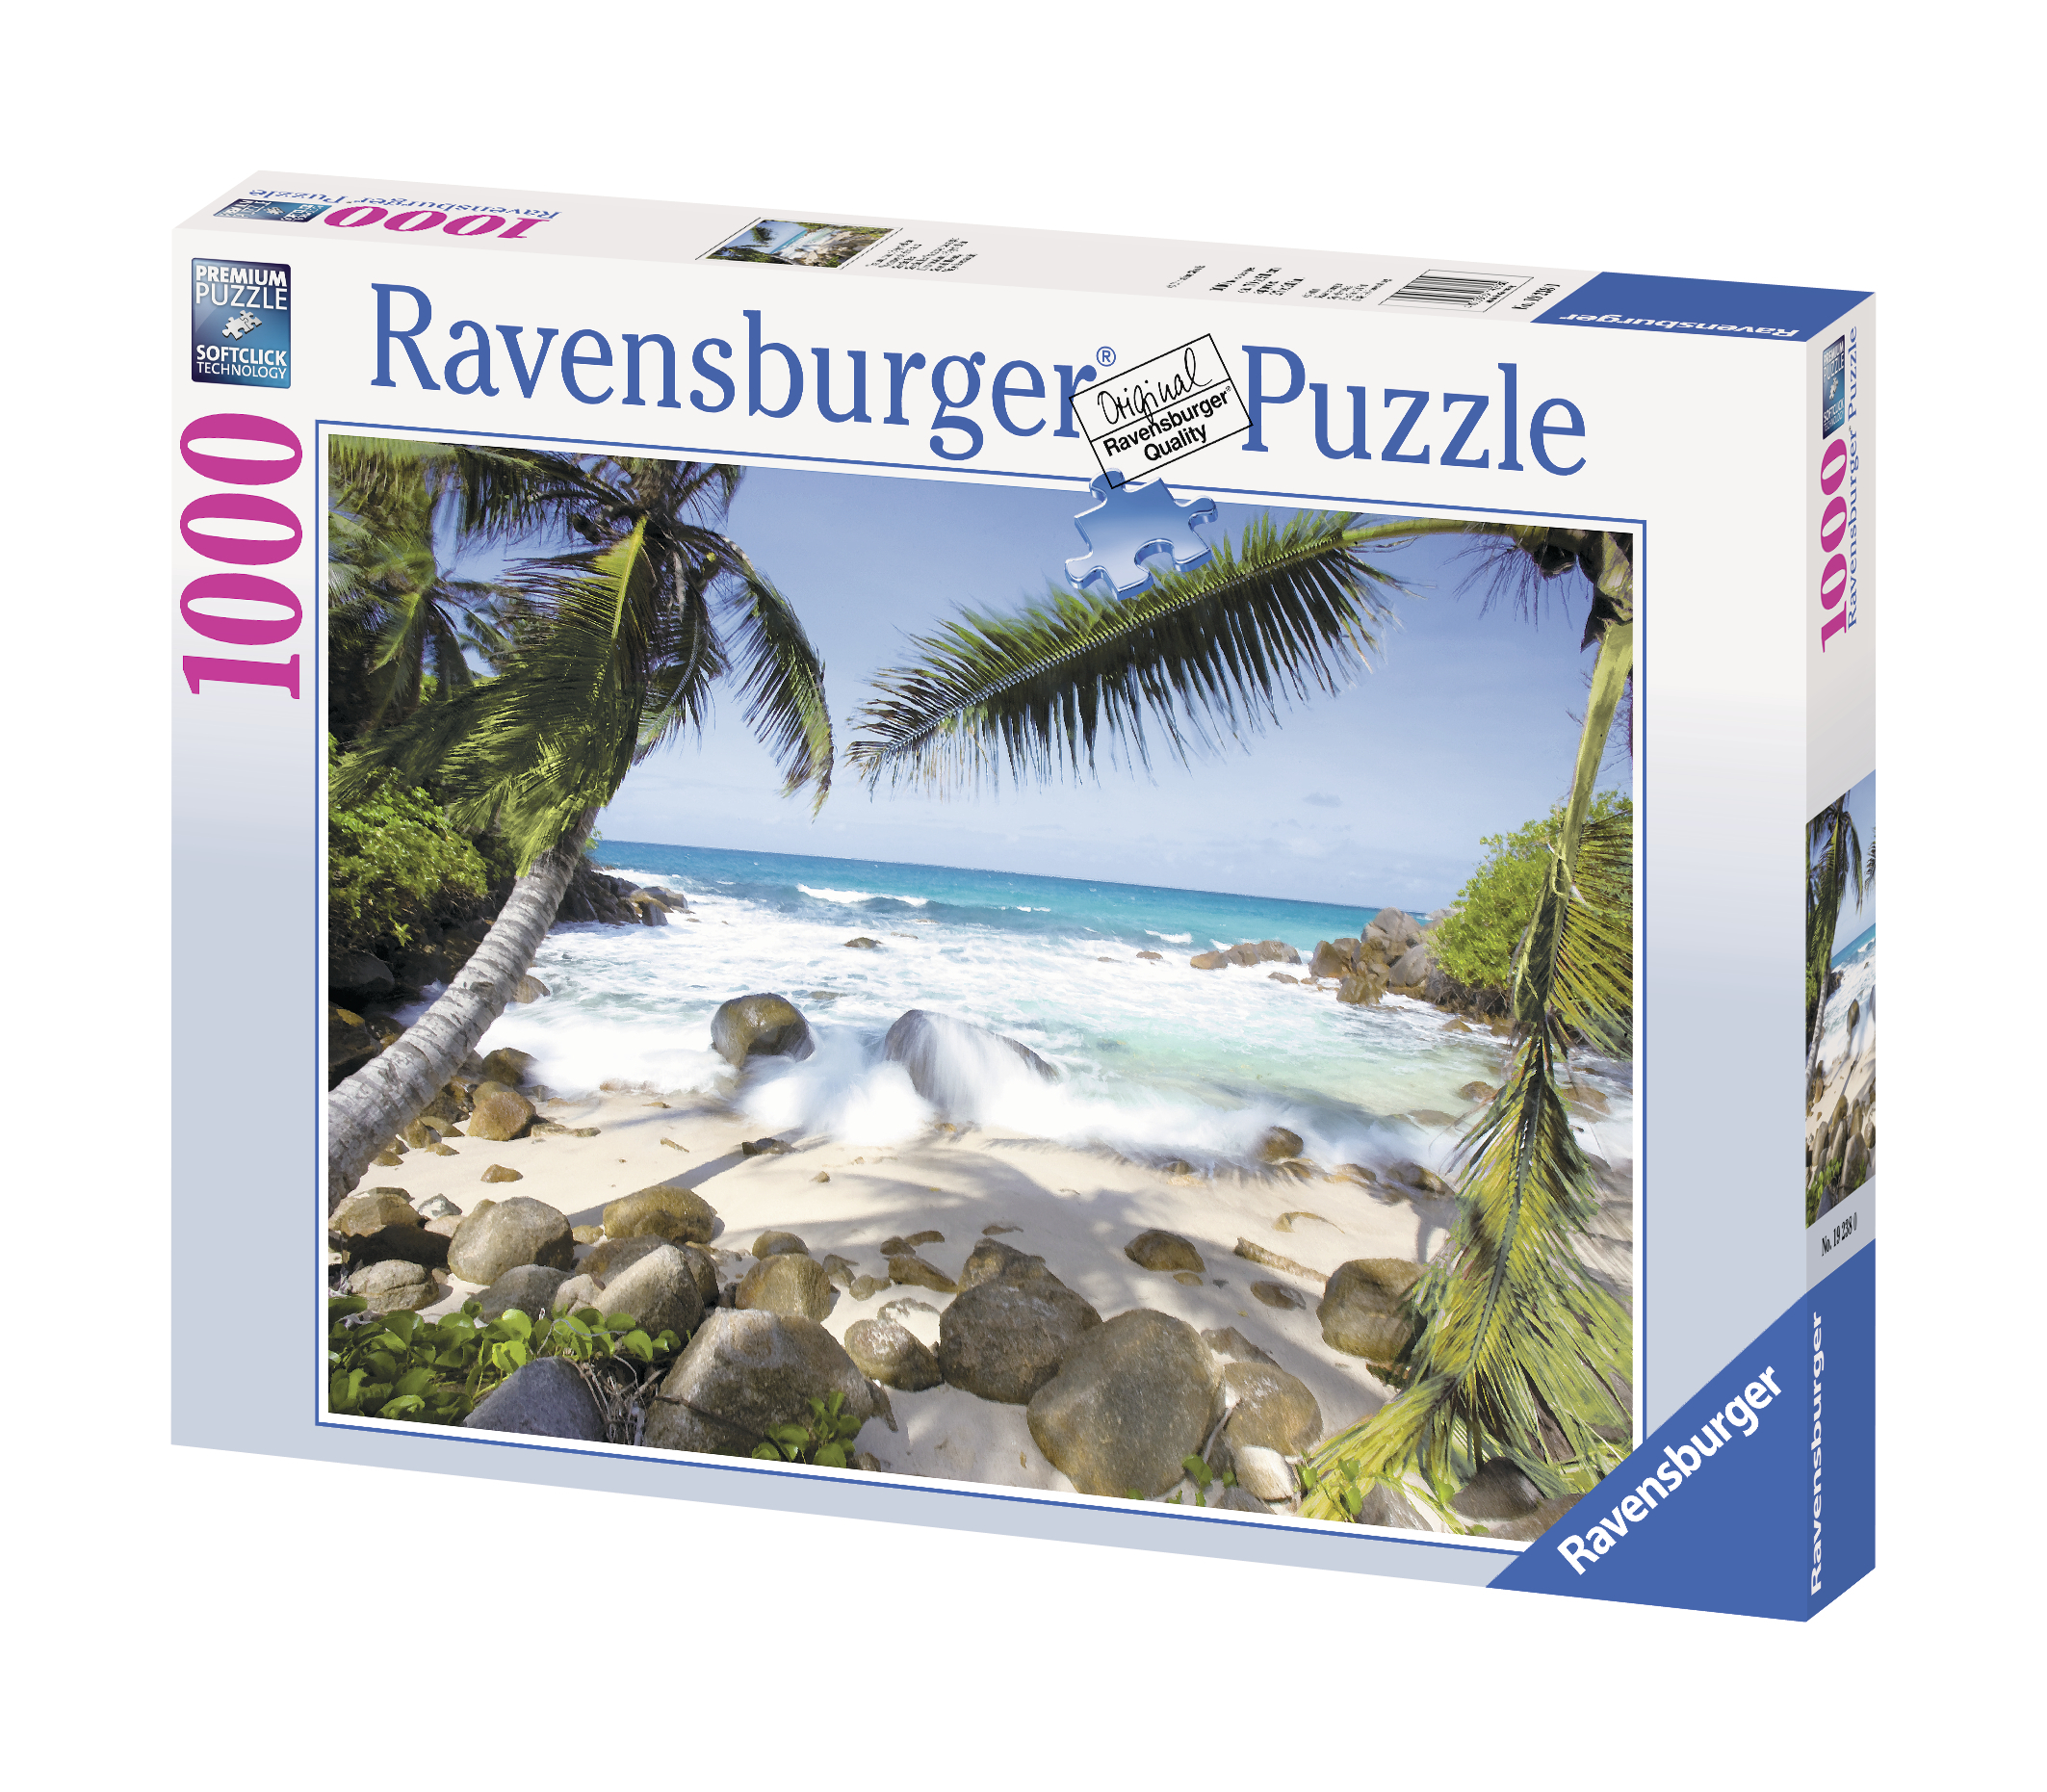 Ravensburger - Seaside Beauty -1000 Piece Jigsaw Puzzle - image 1 of 3